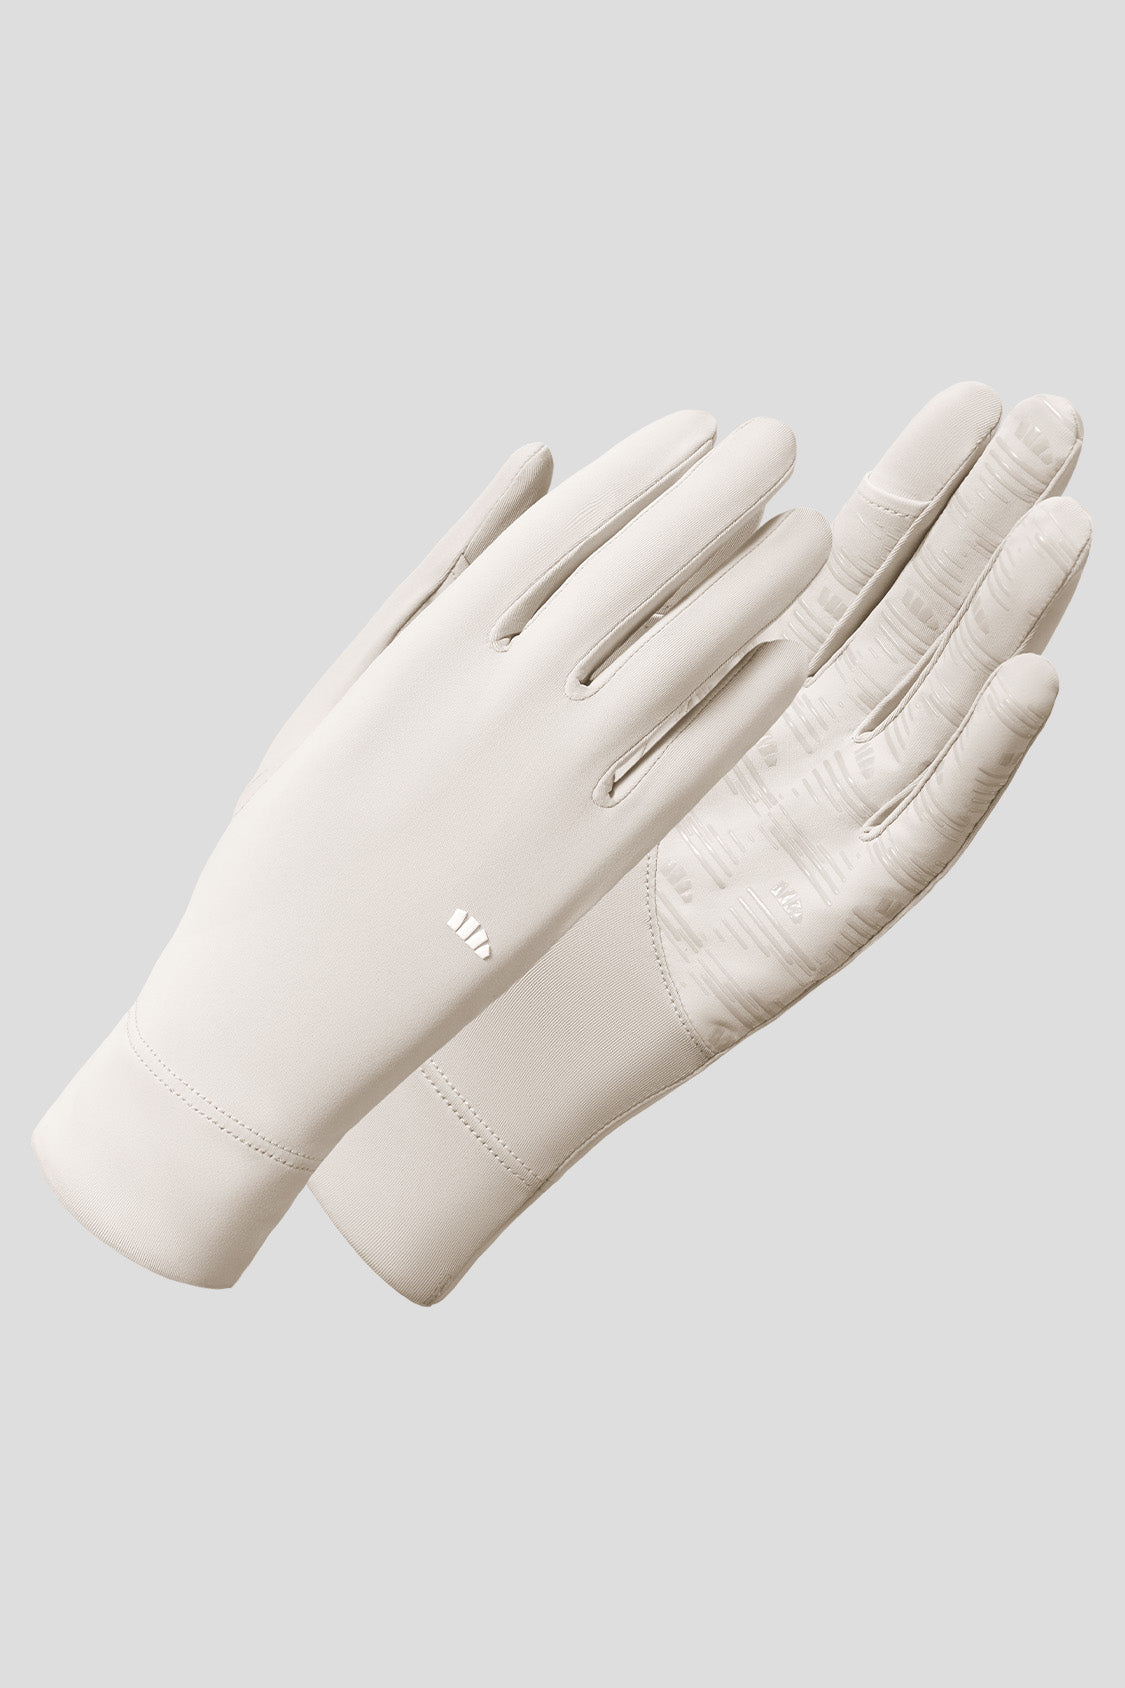 Sun Protection Gloves for Women Uv 50 Sun Protection Gloves for Women  Driving Sun Gloves for Men Uv Protection Pale Mauve